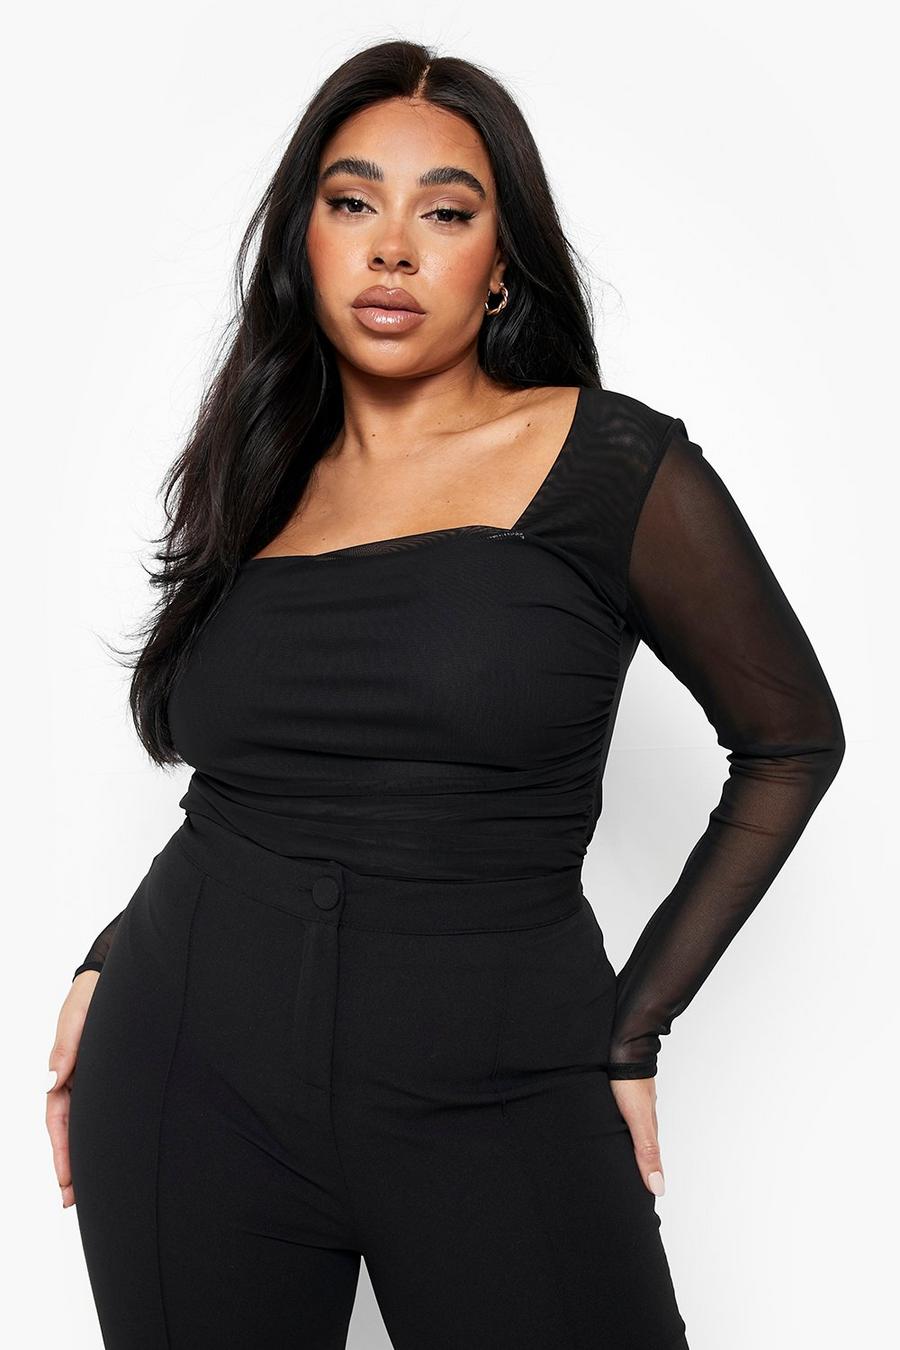 https://media.boohoo.com/i/boohoo/gzz06426_black_xl/female-black-plus-mesh-ruched-bodysuit/?w=900&qlt=default&fmt.jp2.qlt=70&fmt=auto&sm=fit